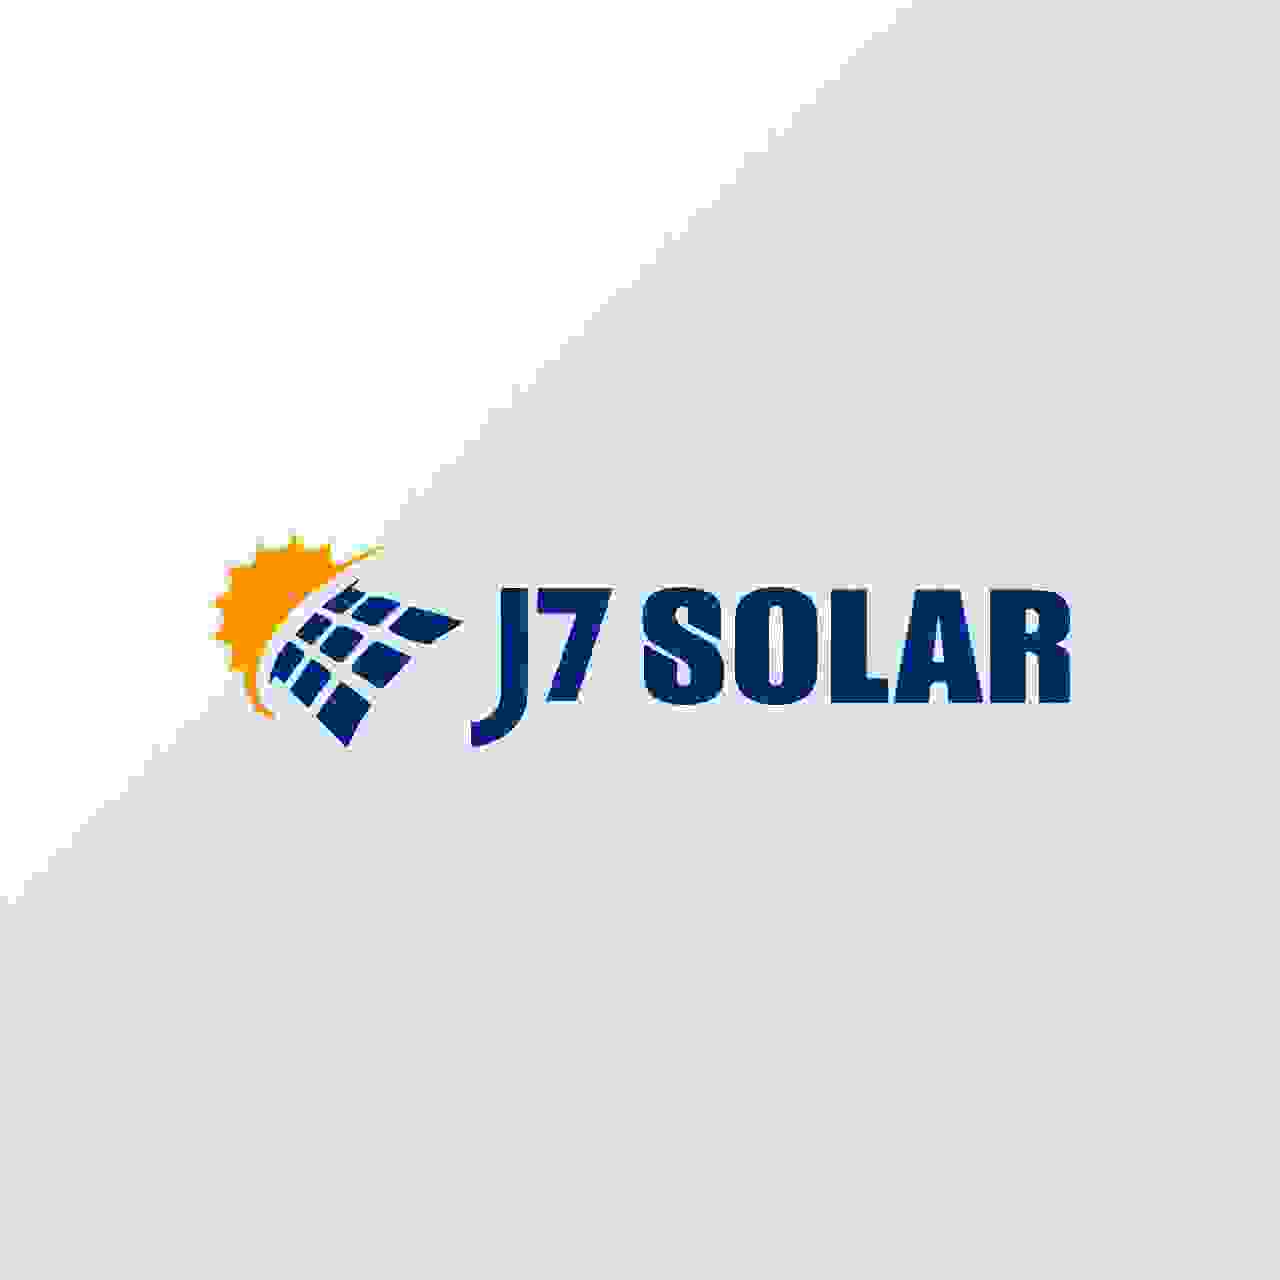 J7 Solar